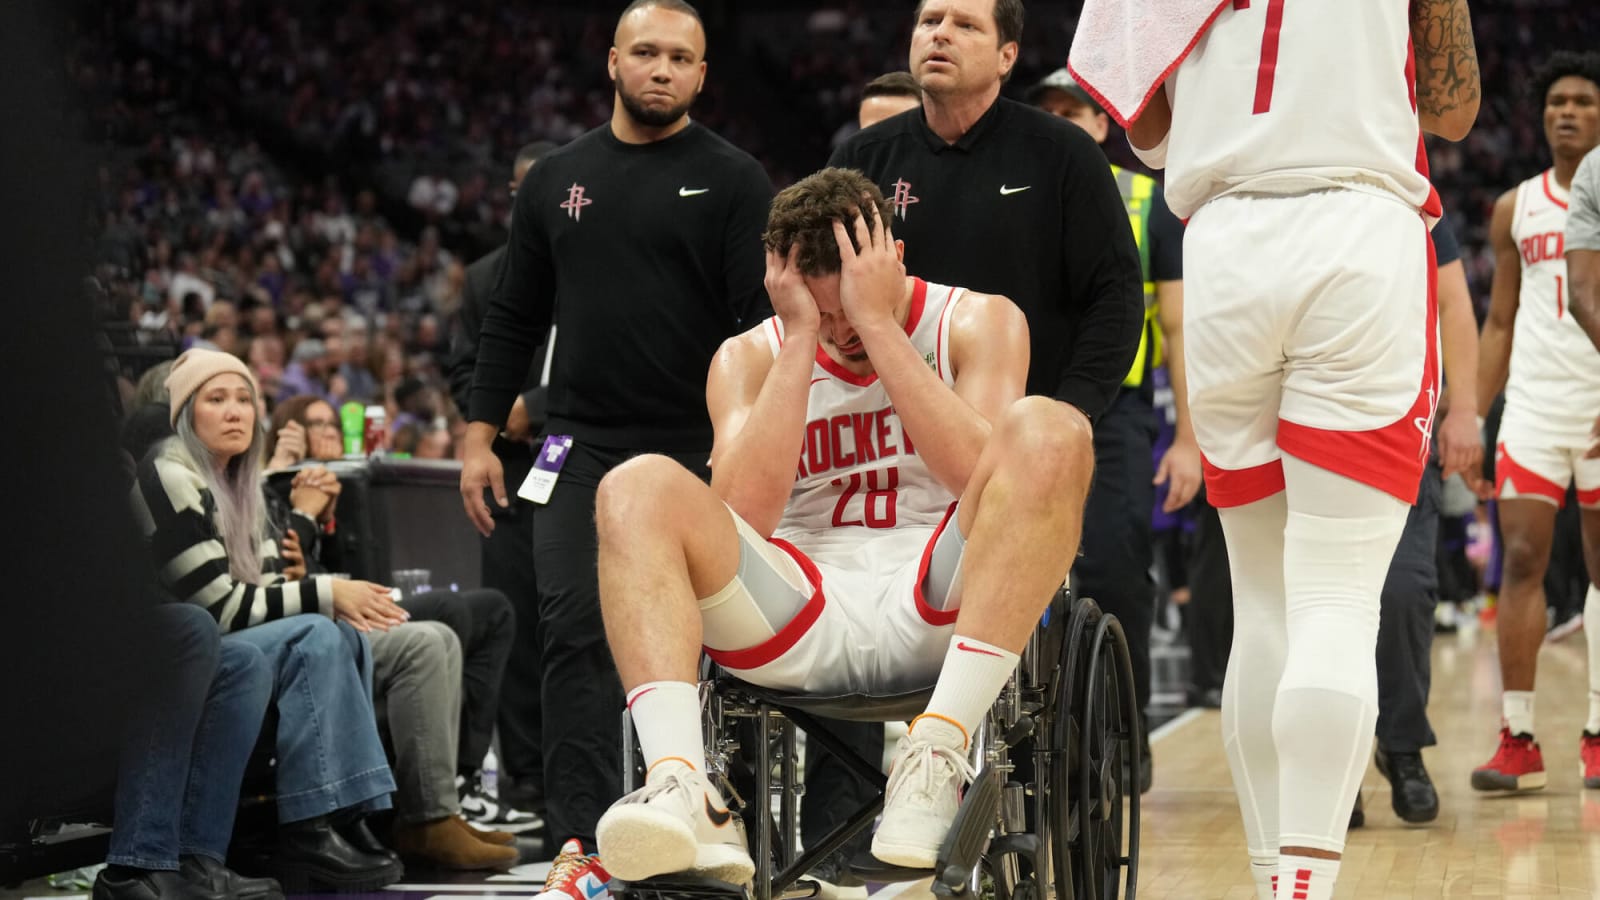 Watch: Rockets star Alperen Sengun escorted out in wheelchair after devastating fall against Sacramento Kings